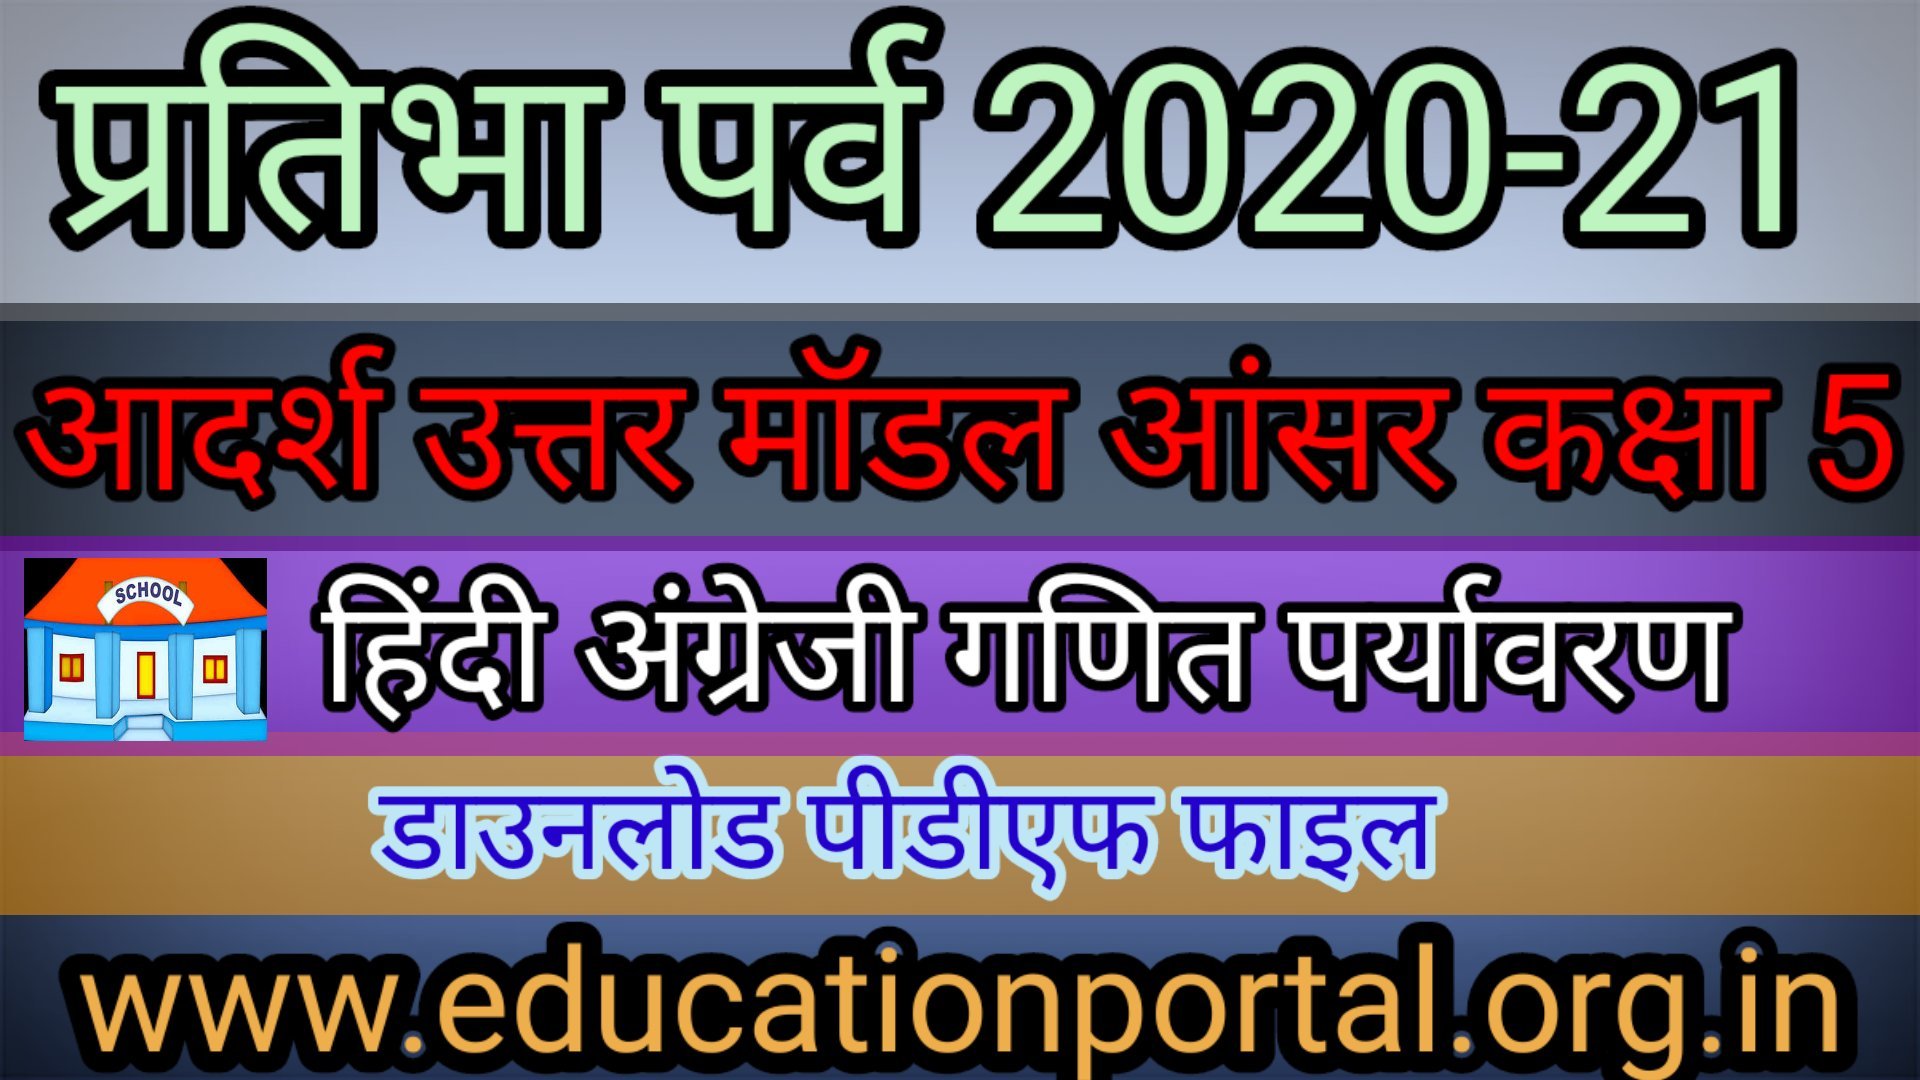 मॉडल आन्सर (सभी विषय) कक्षा-5वीं Model Answer (all Subjects) Class 5th 'प्रतिभापर्व' ('Pratibhaparva') 2021